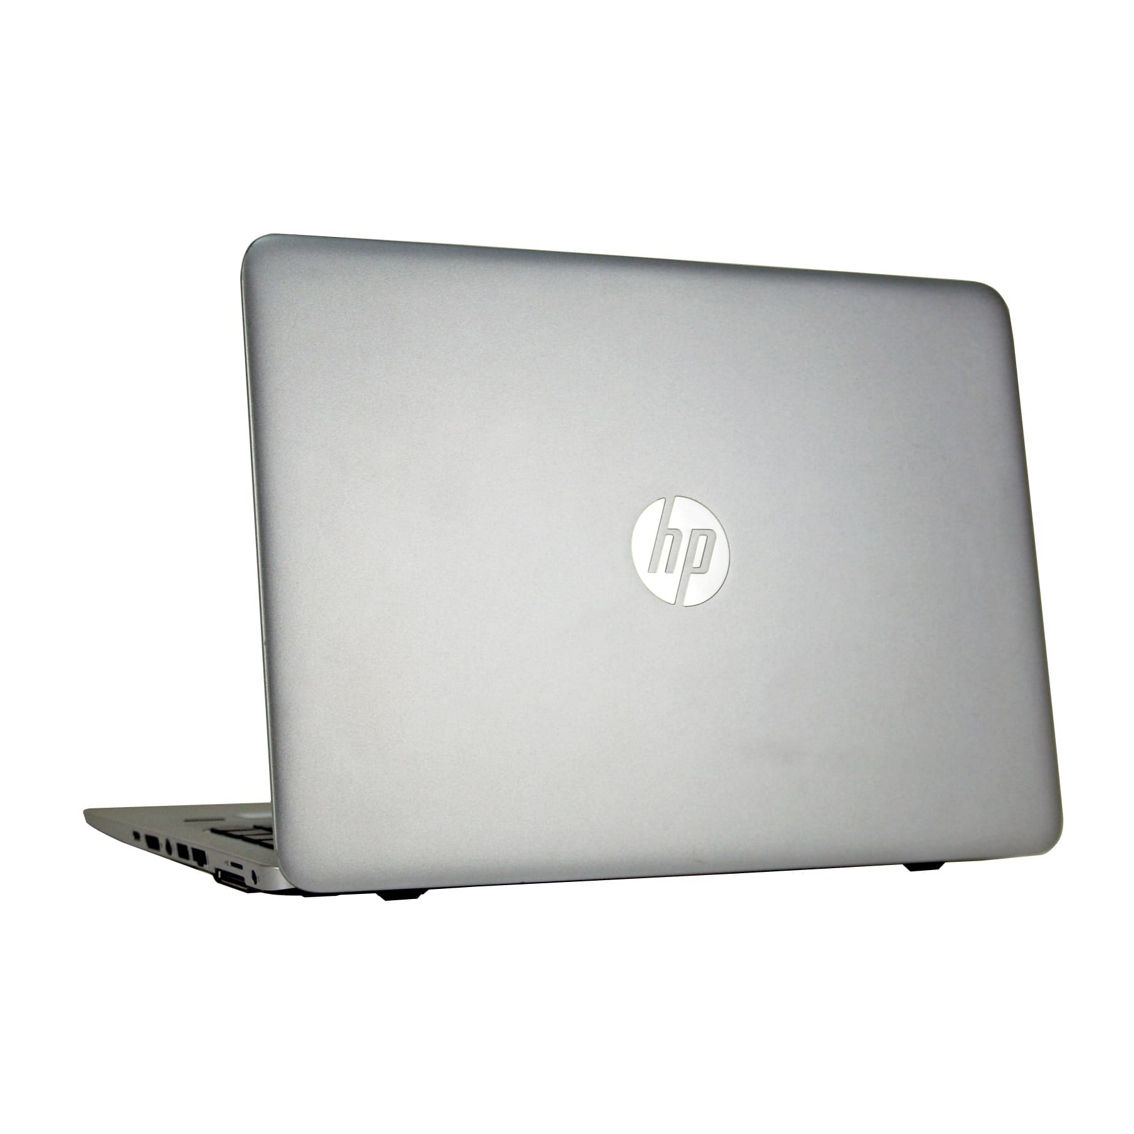 HP 840 G3 Core i5-6300U 2.4GHz 16GB Ram 512GB SSD Laptop (Refurbished) - Image 2 of 4